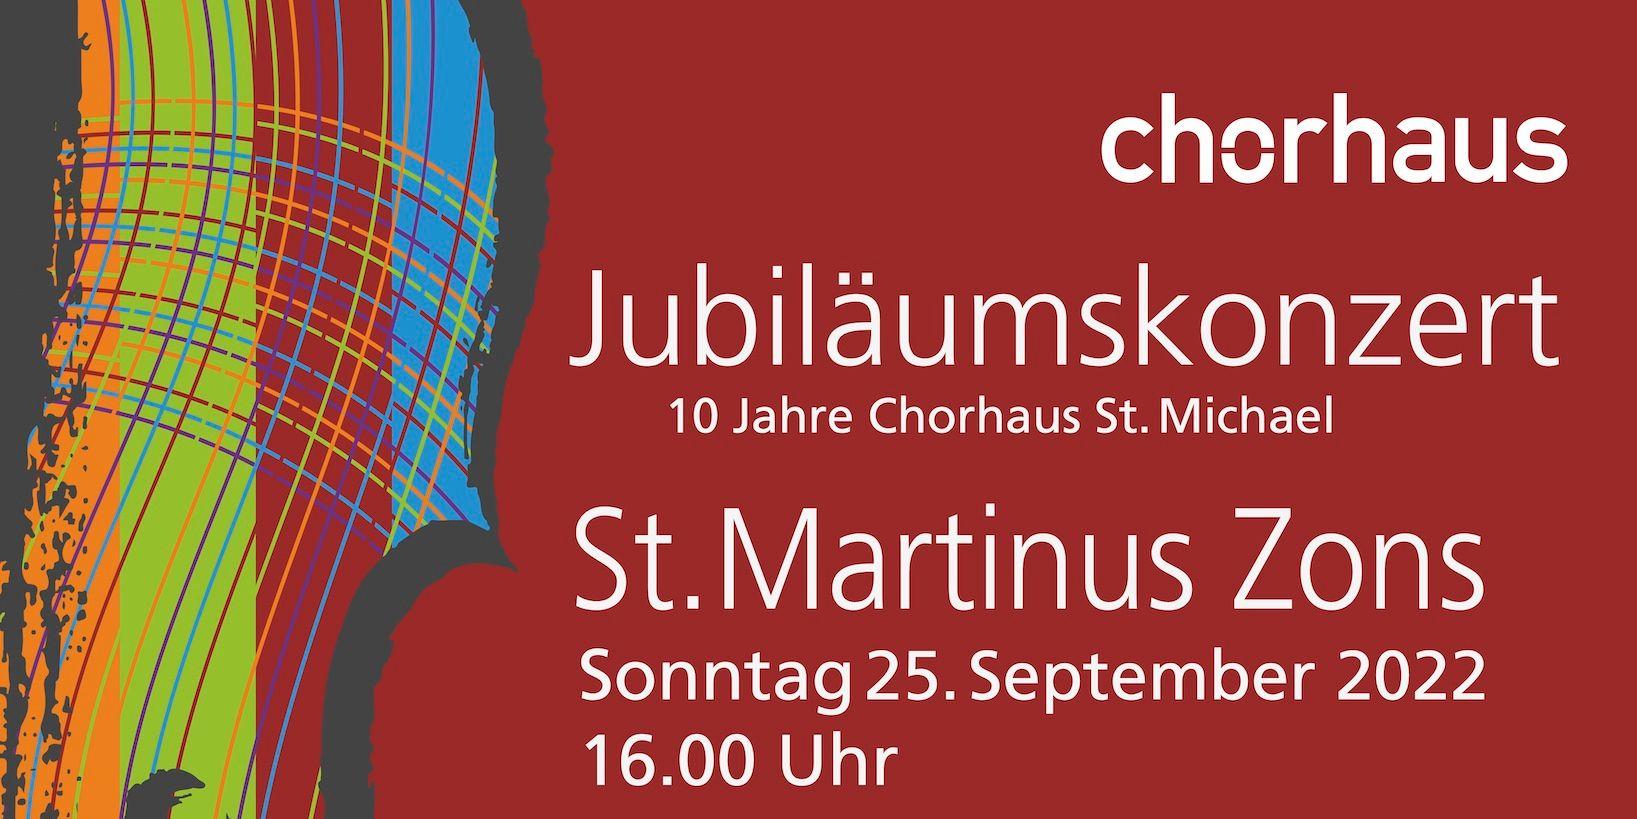 Jubiläumskonzert 10 Jahre Chorhaus St. Michael